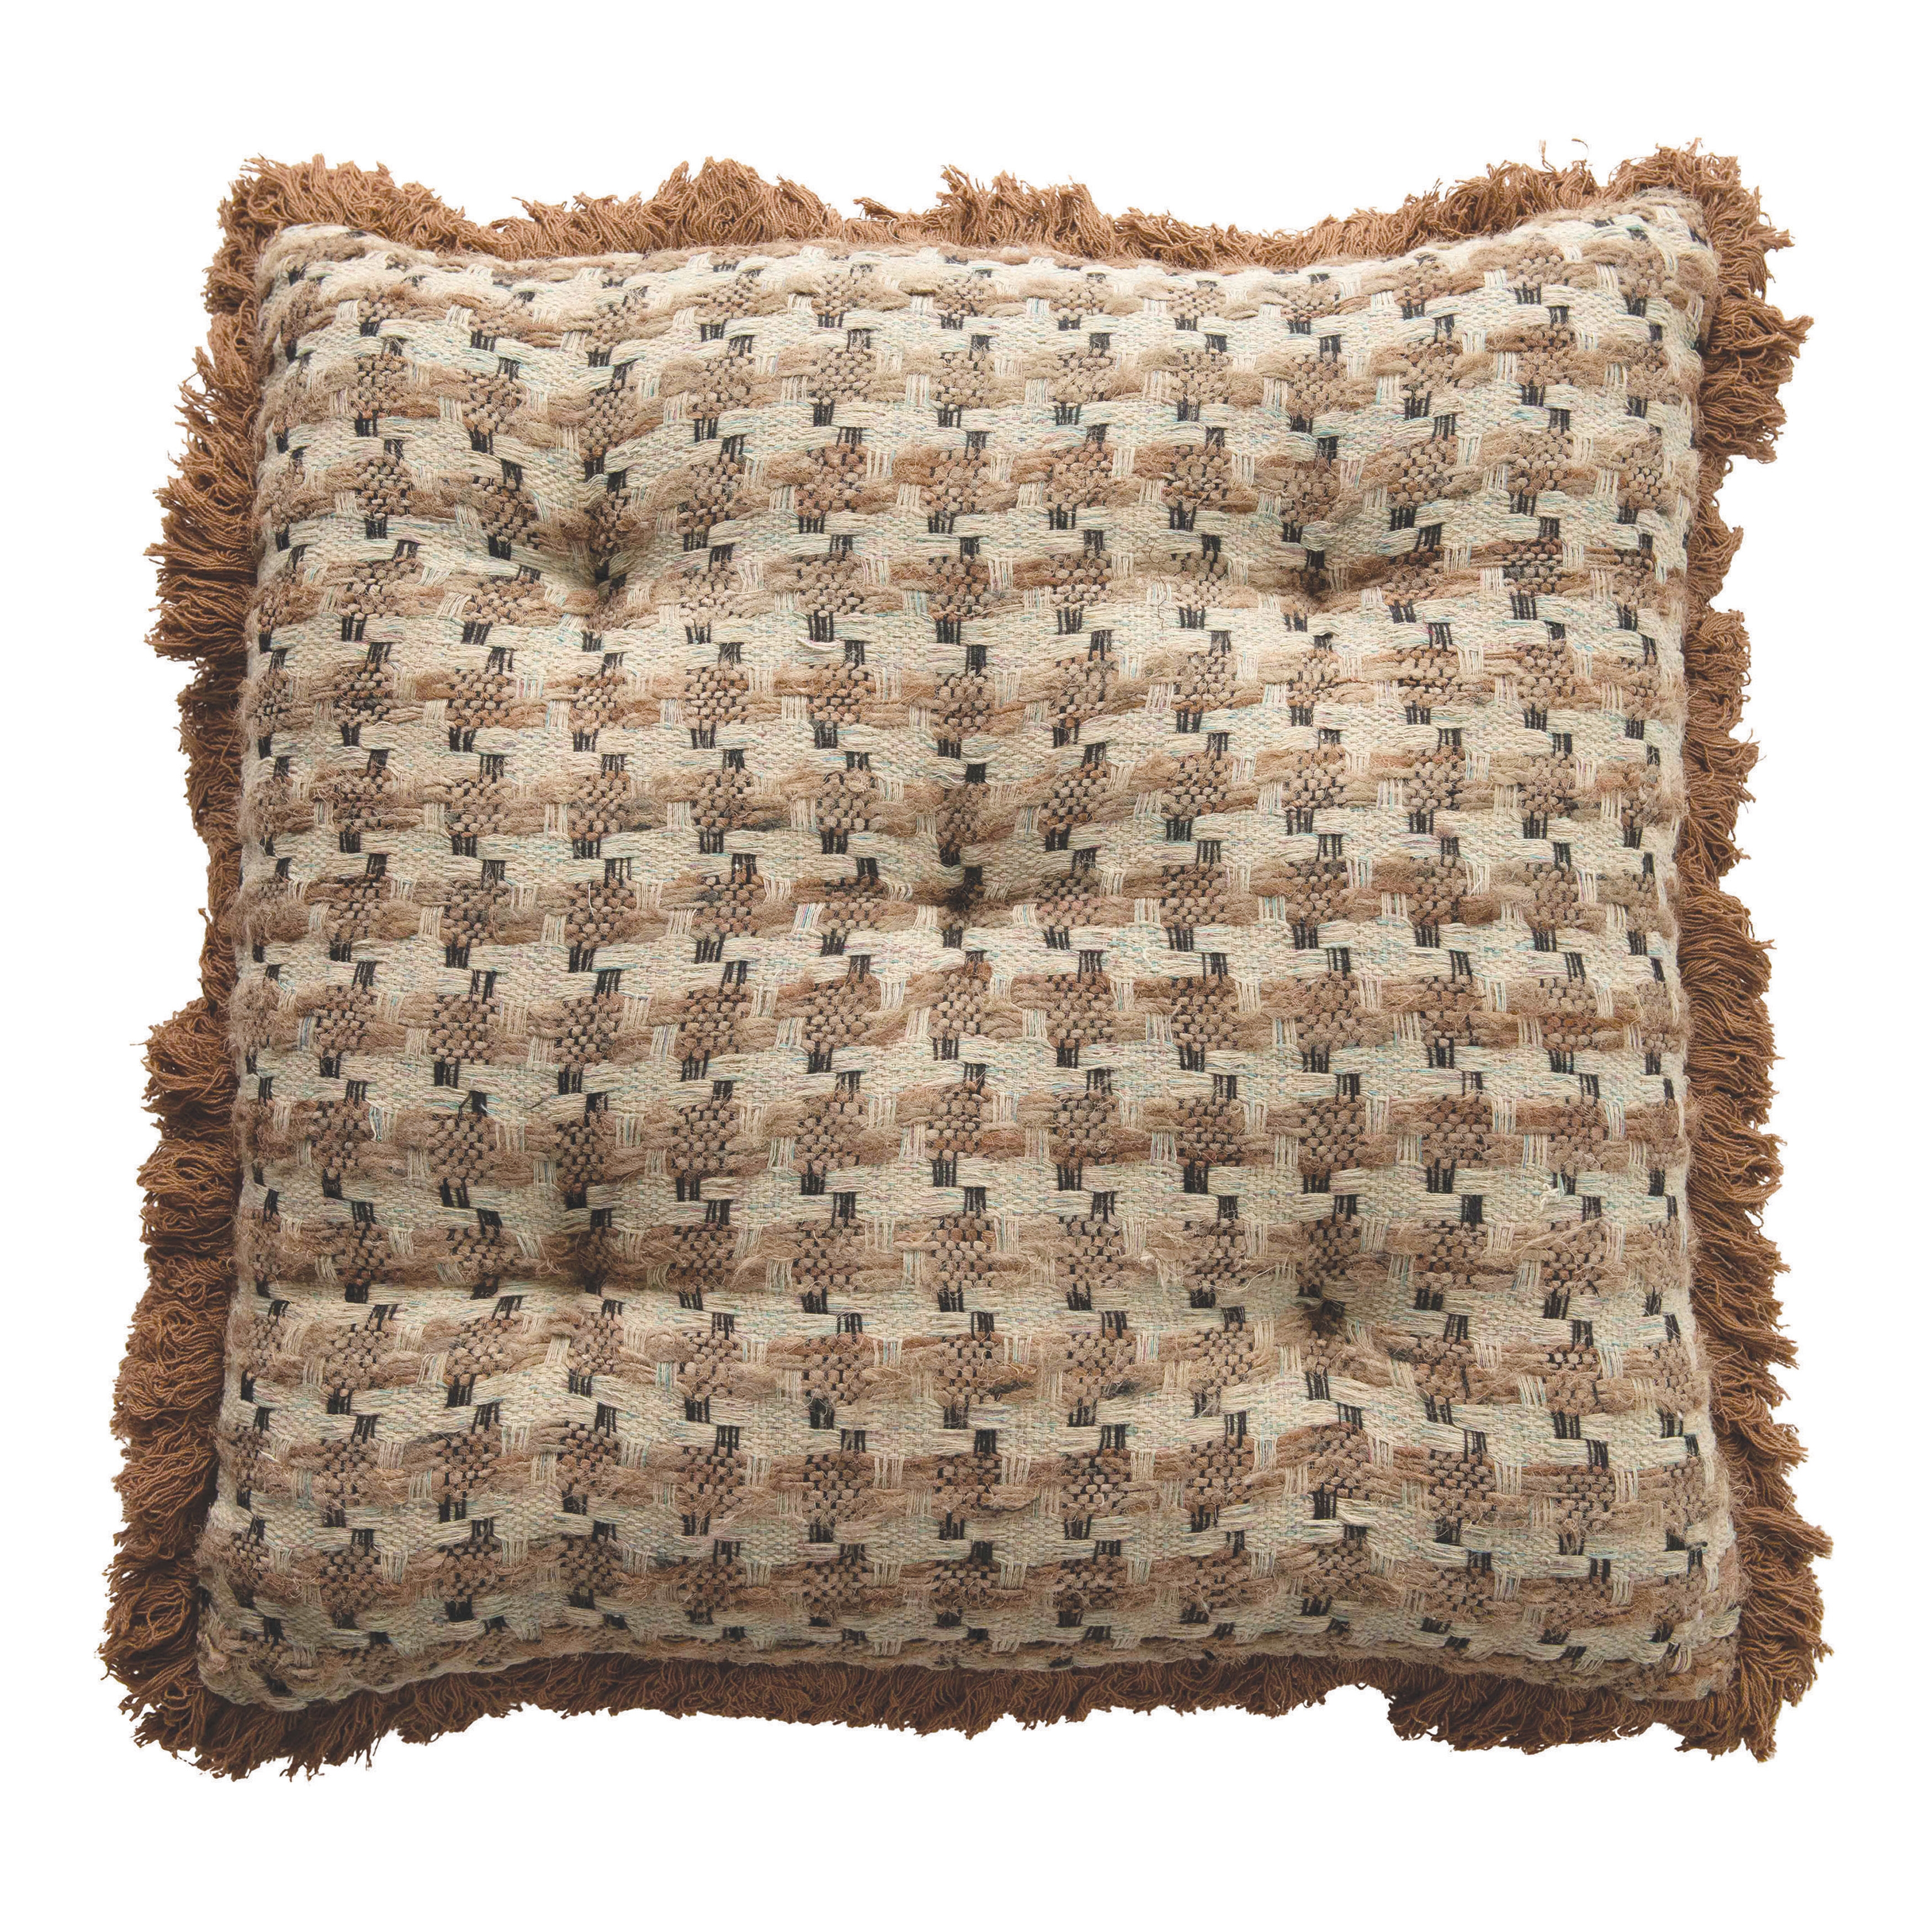 Woven Cotton Pillow with Eyelash Fringe, Multi Color - Image 0